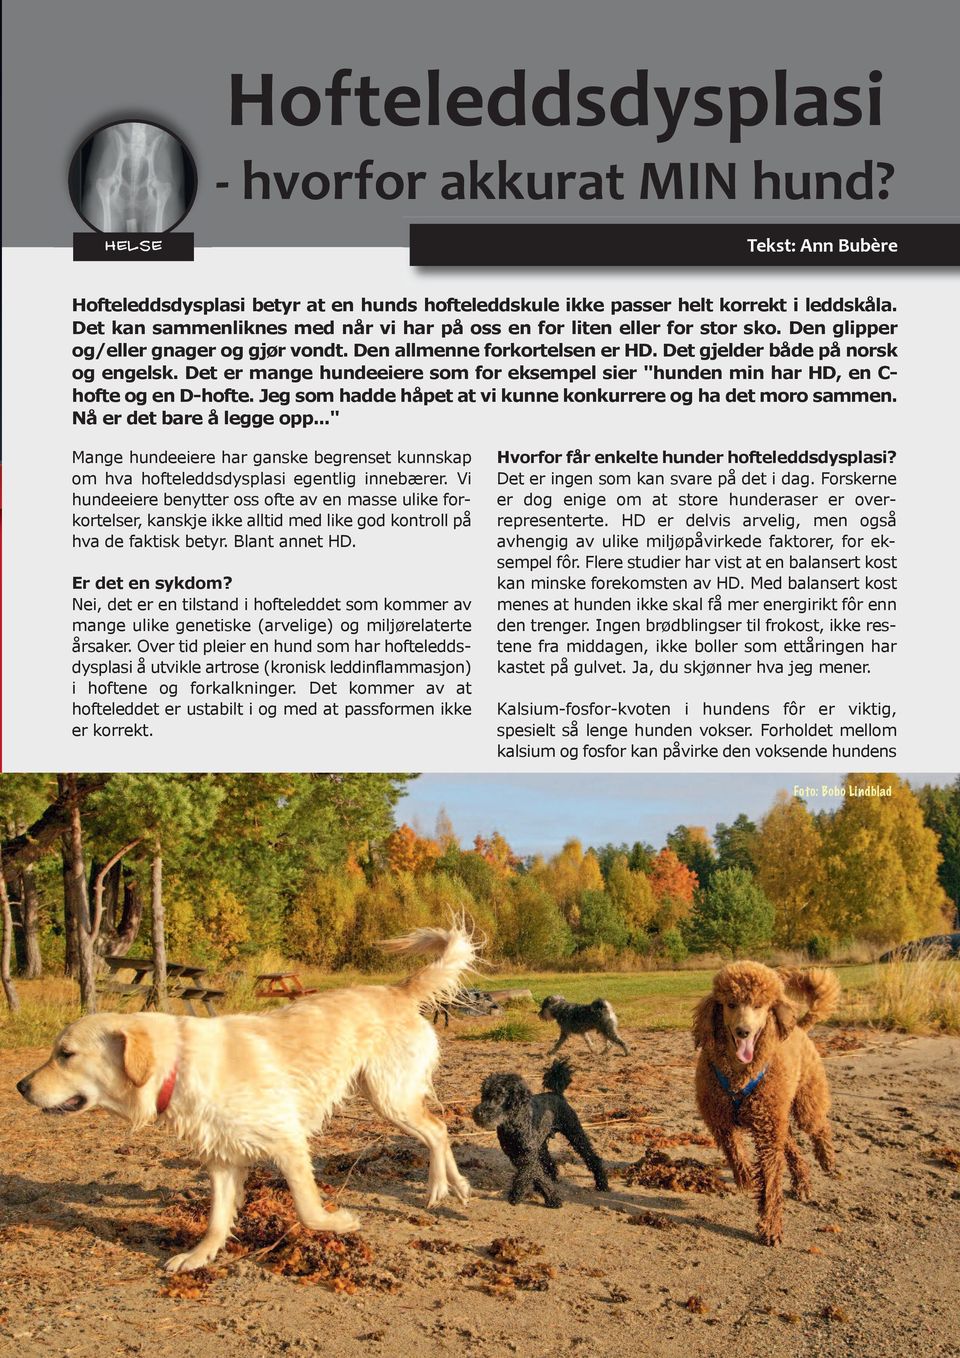 Hofteleddsdysplasi. - hvorfor akkurat MIN hund? - PDF Free Download